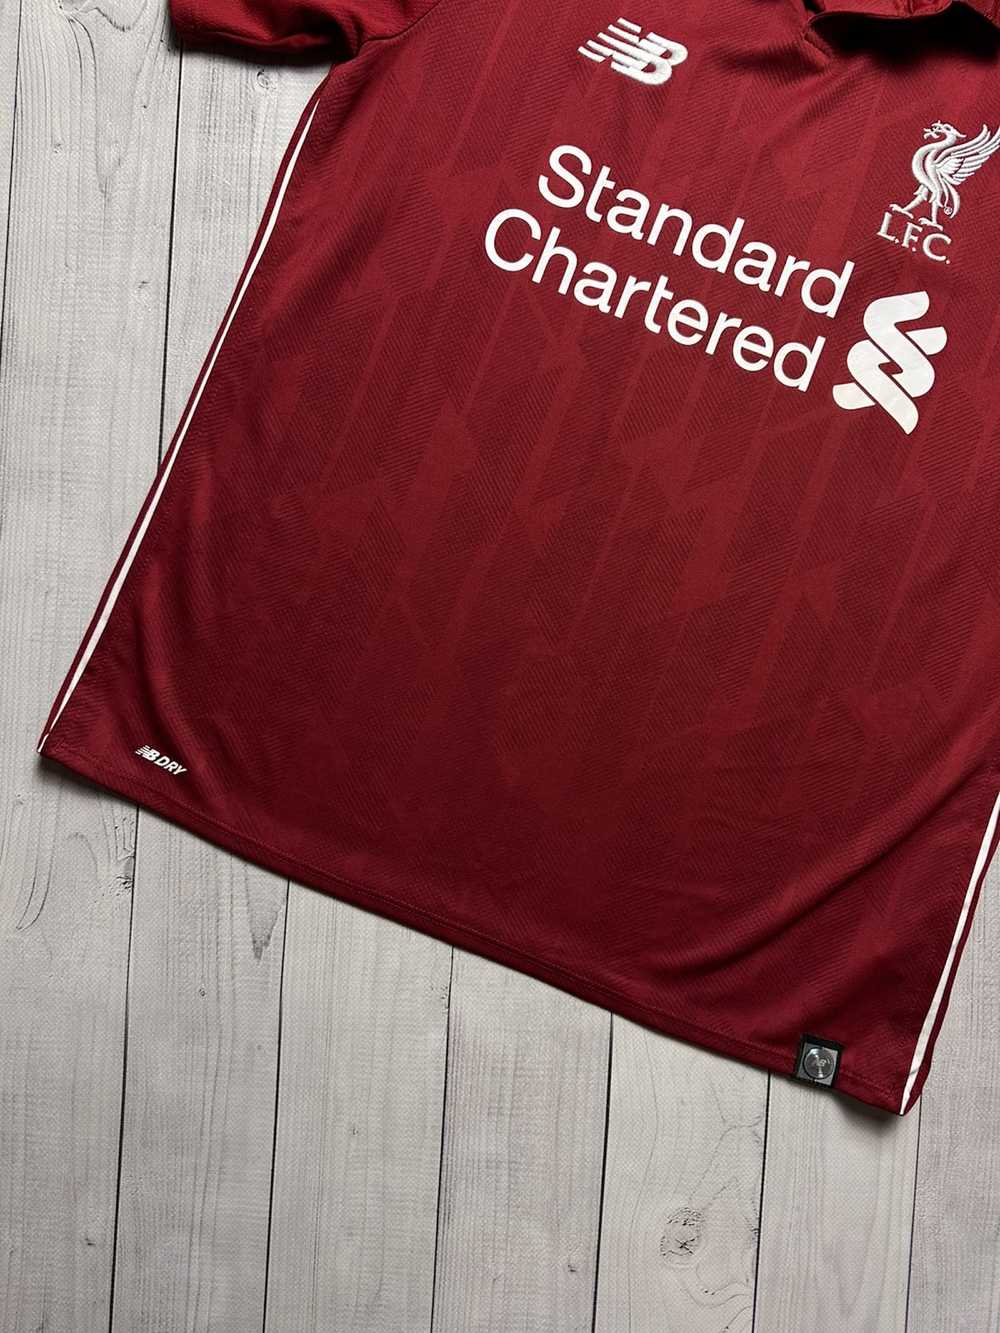 Liverpool × Soccer Jersey Vintage Liverpool socce… - image 2